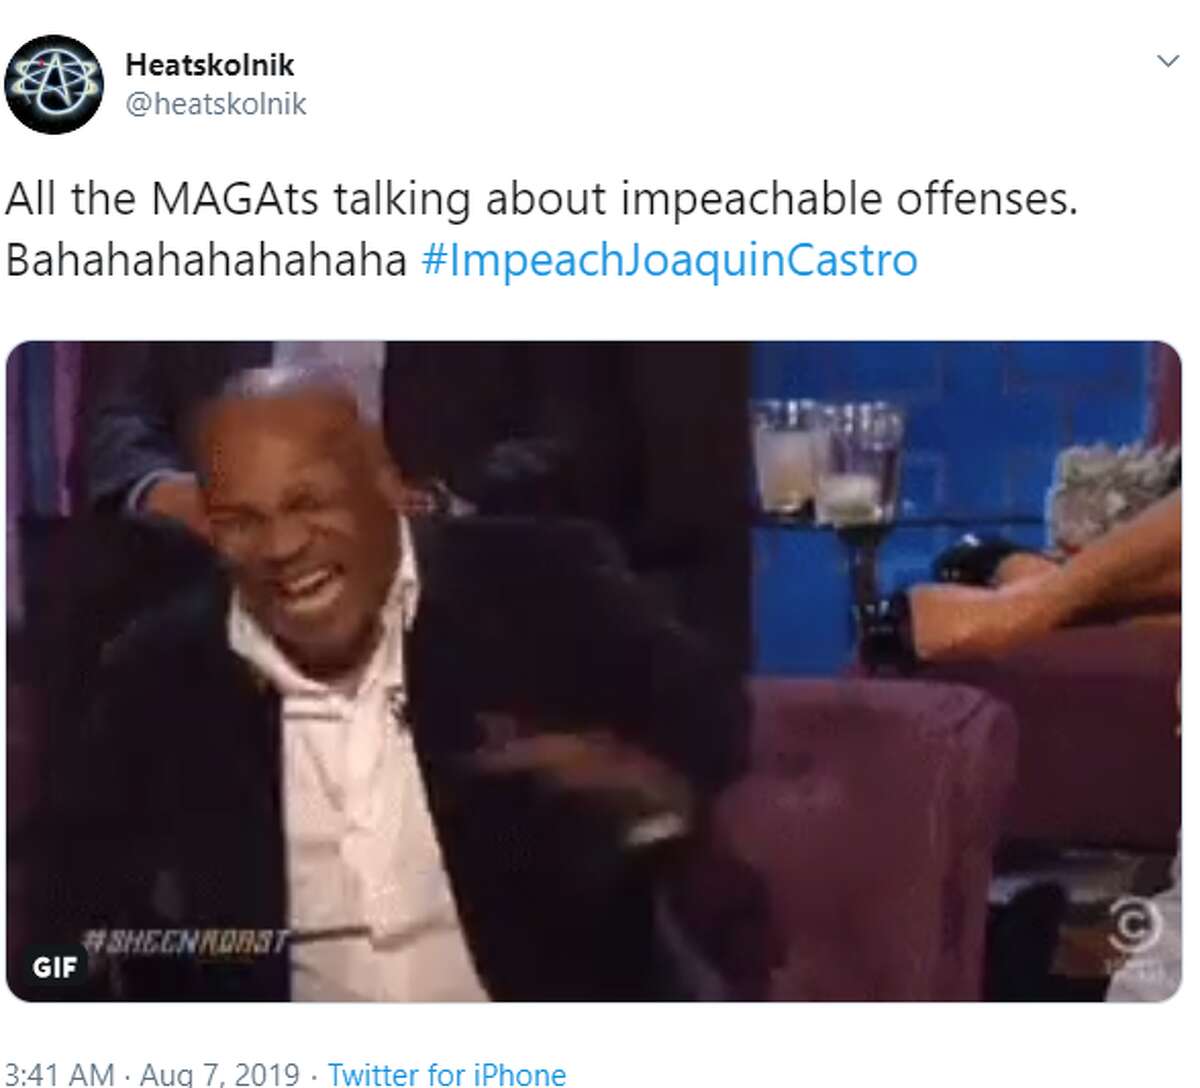 @heatskoInik: All the MAGAts talking about impeachable offenses. Bahahahahahahaha #ImpeachJoaquinCastro